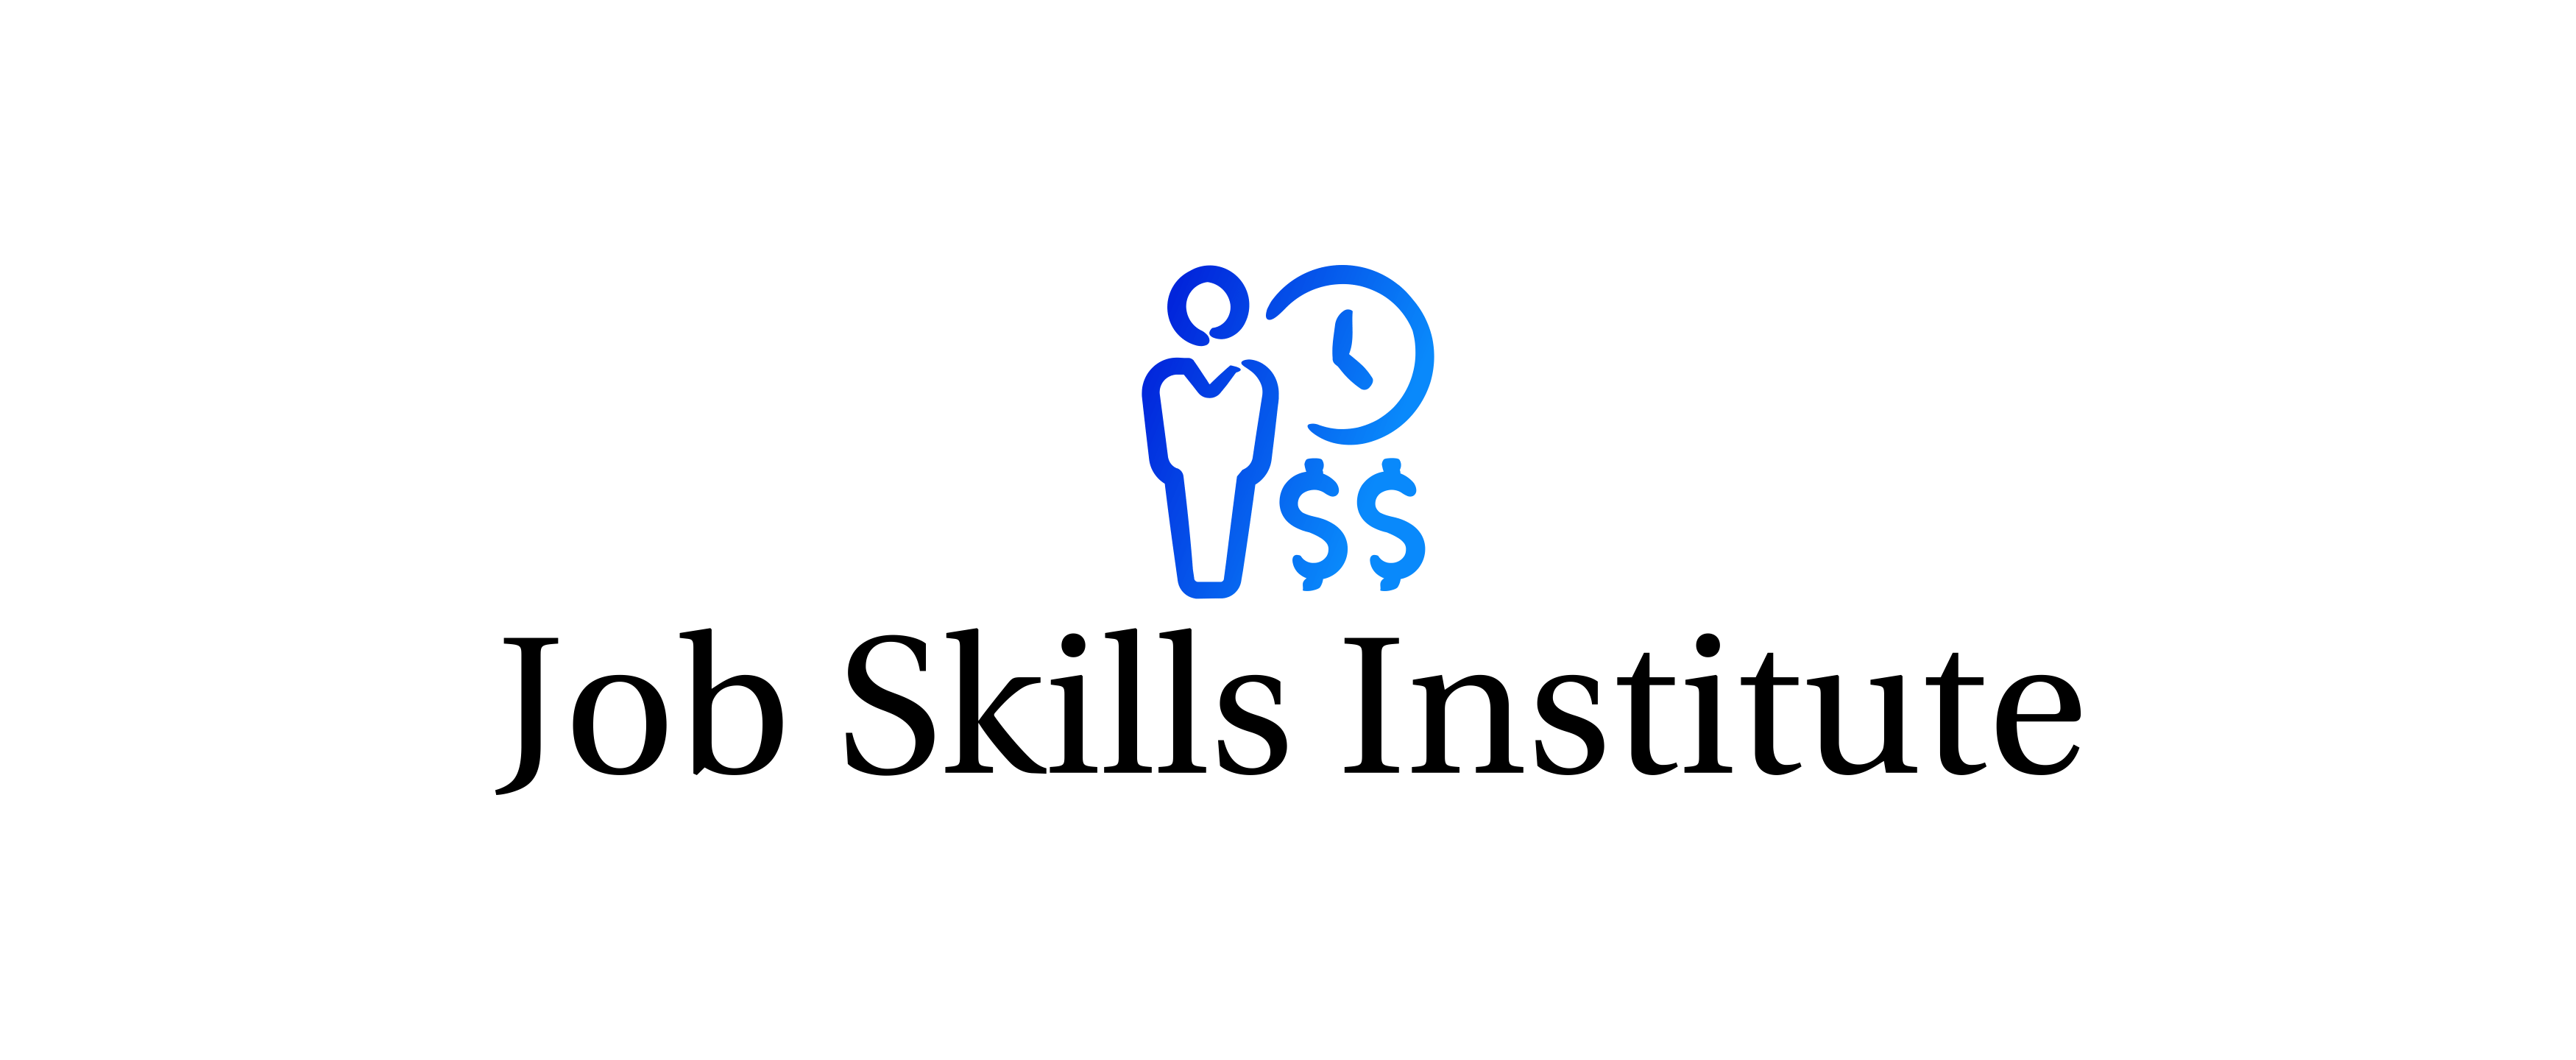 job skill institute logo